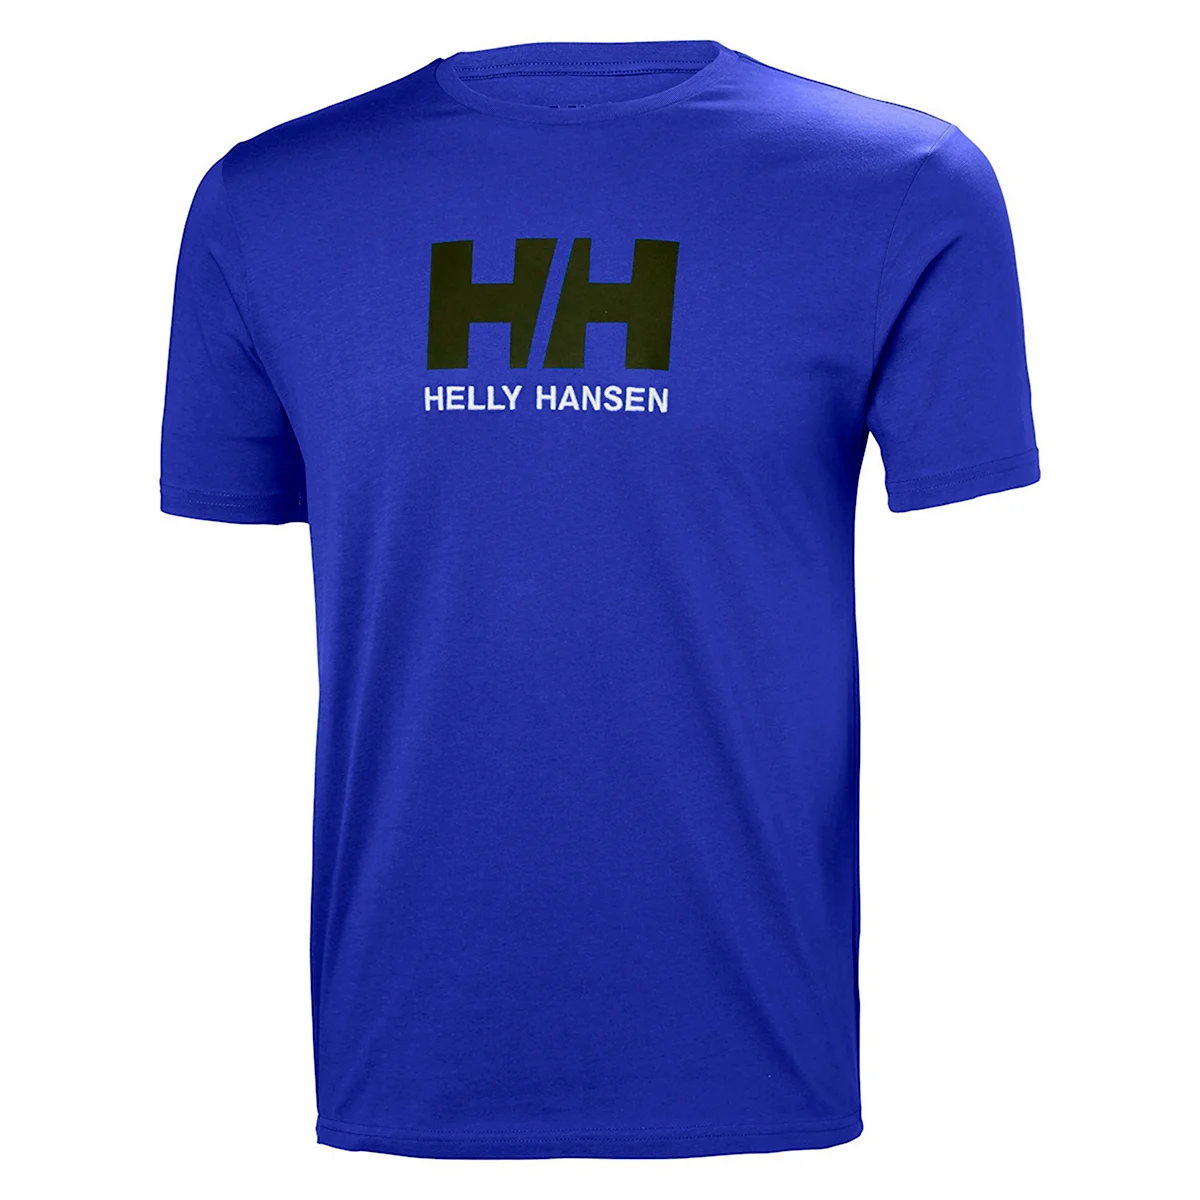 Helly Hansen Olympian Blue